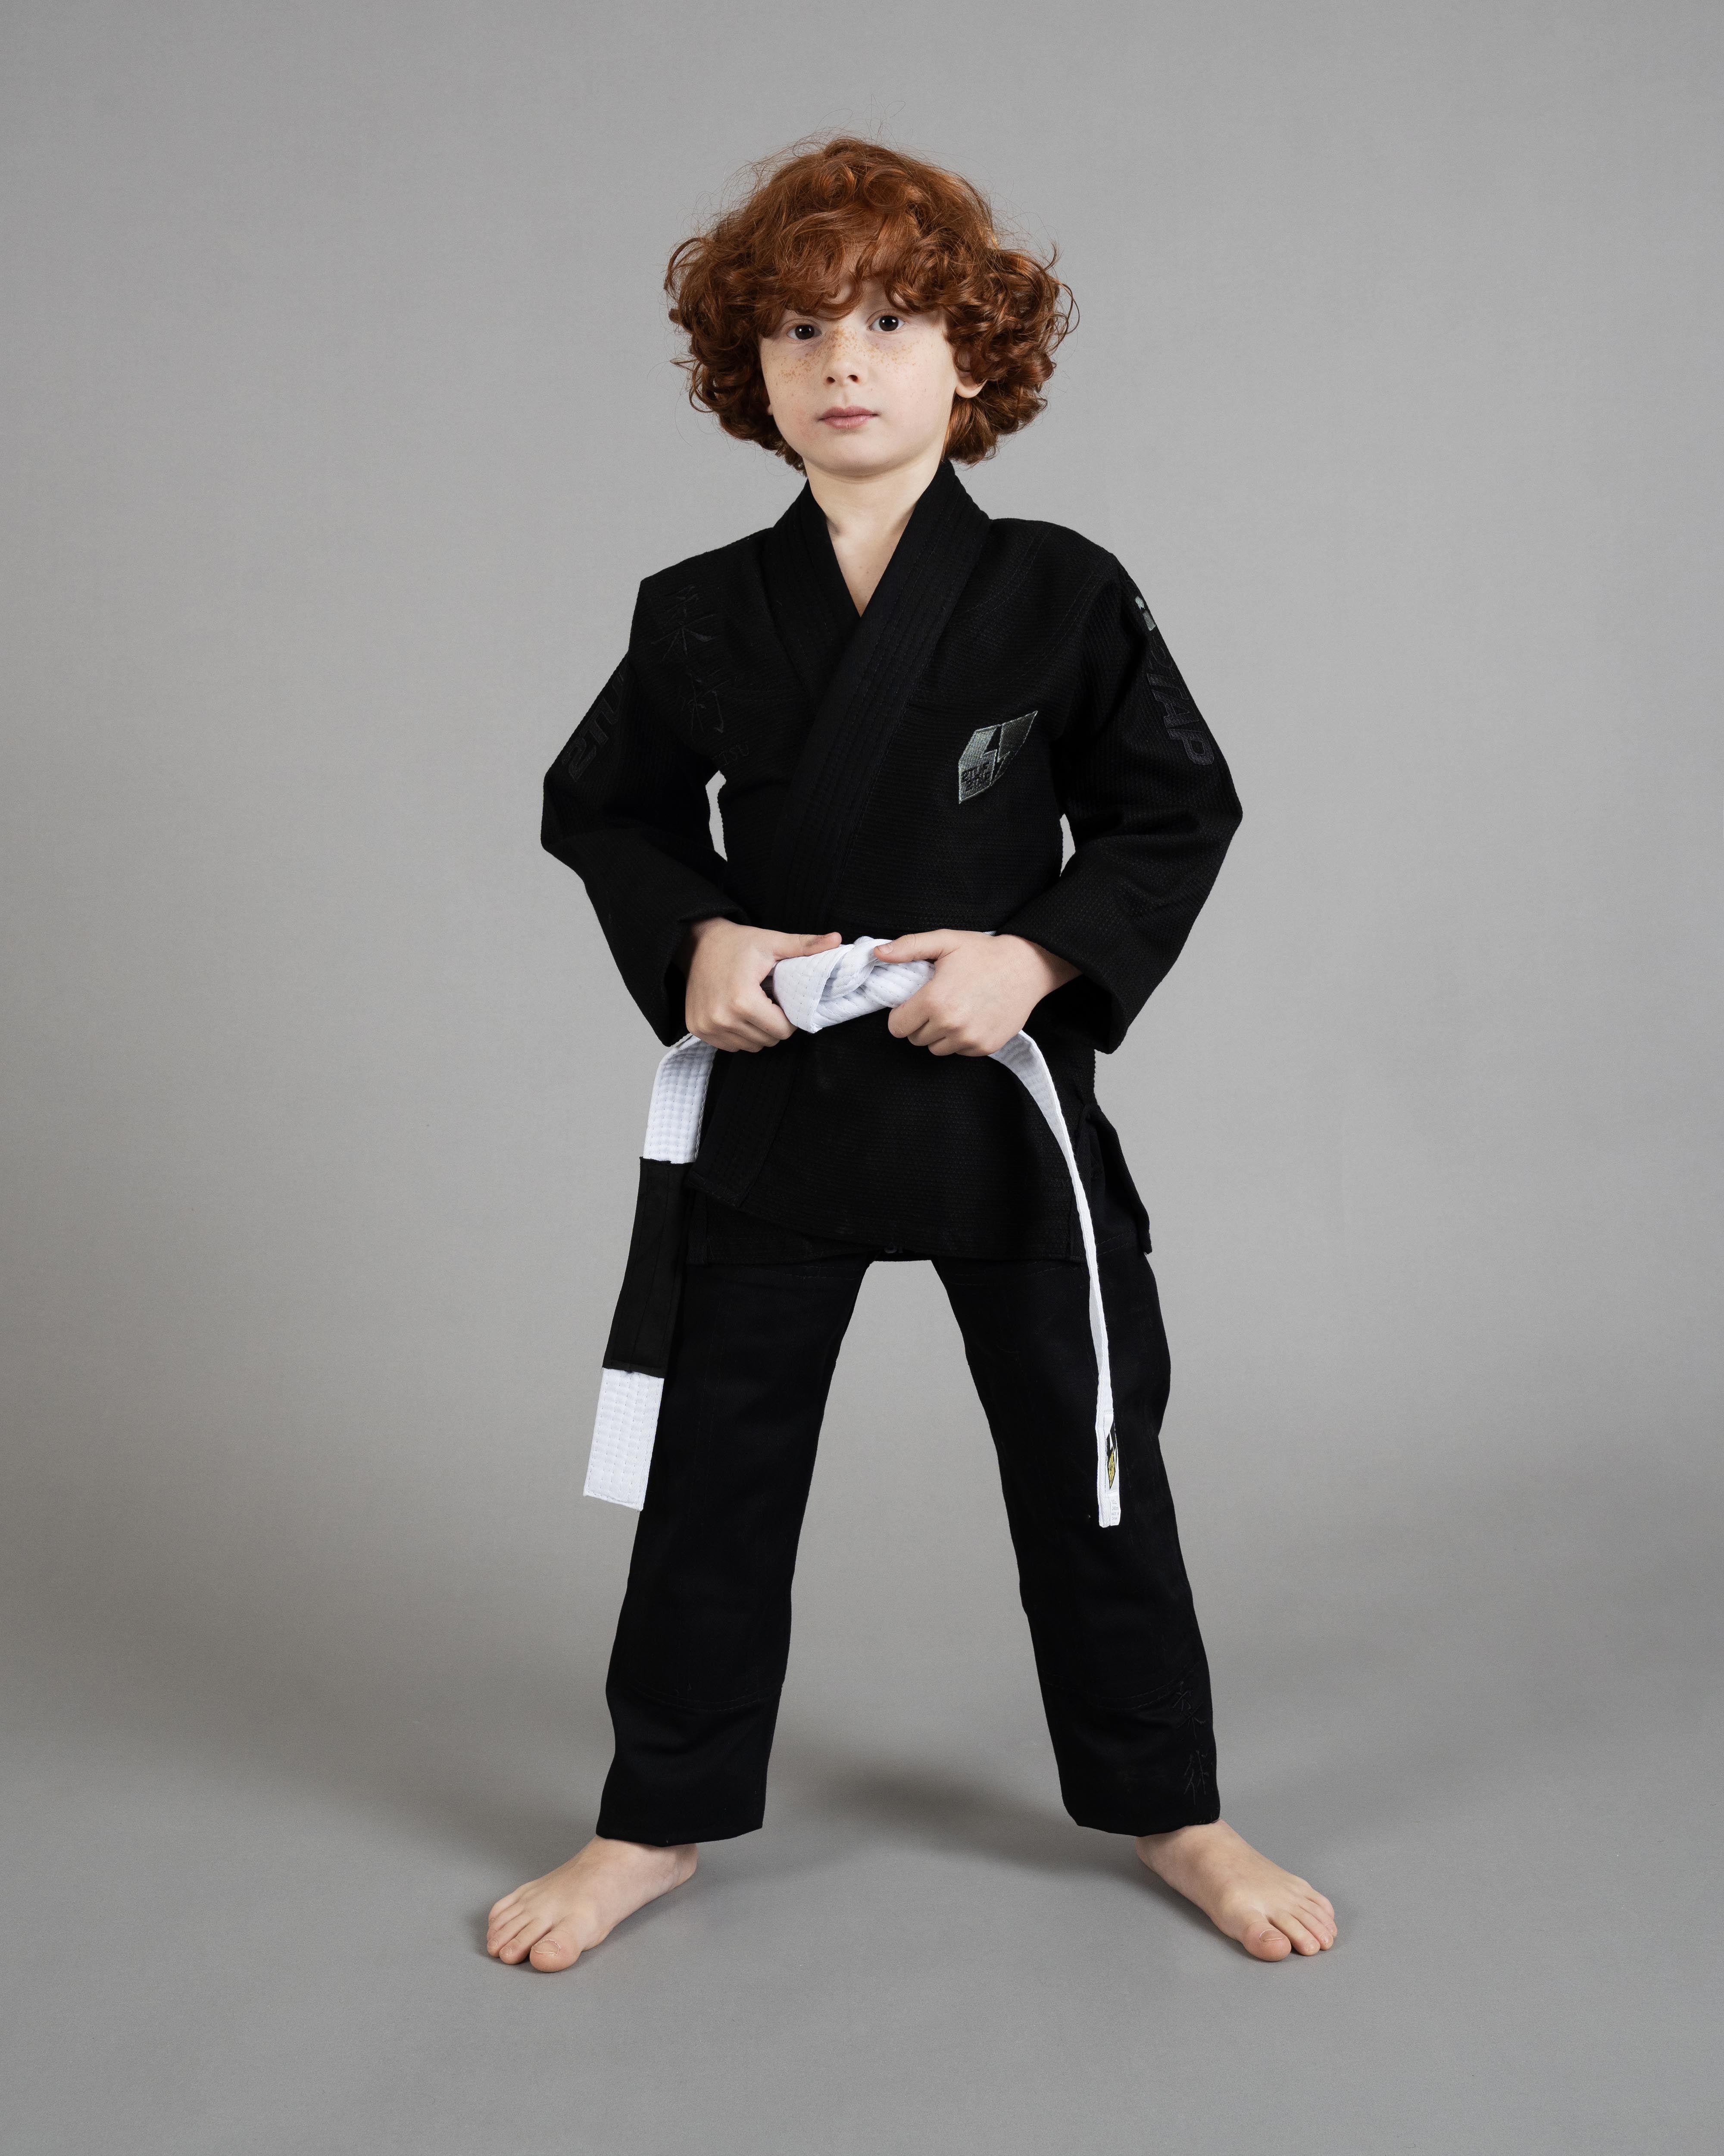 'Bridge' Jiu-Jitsu Gi Uniform - Black/Silver